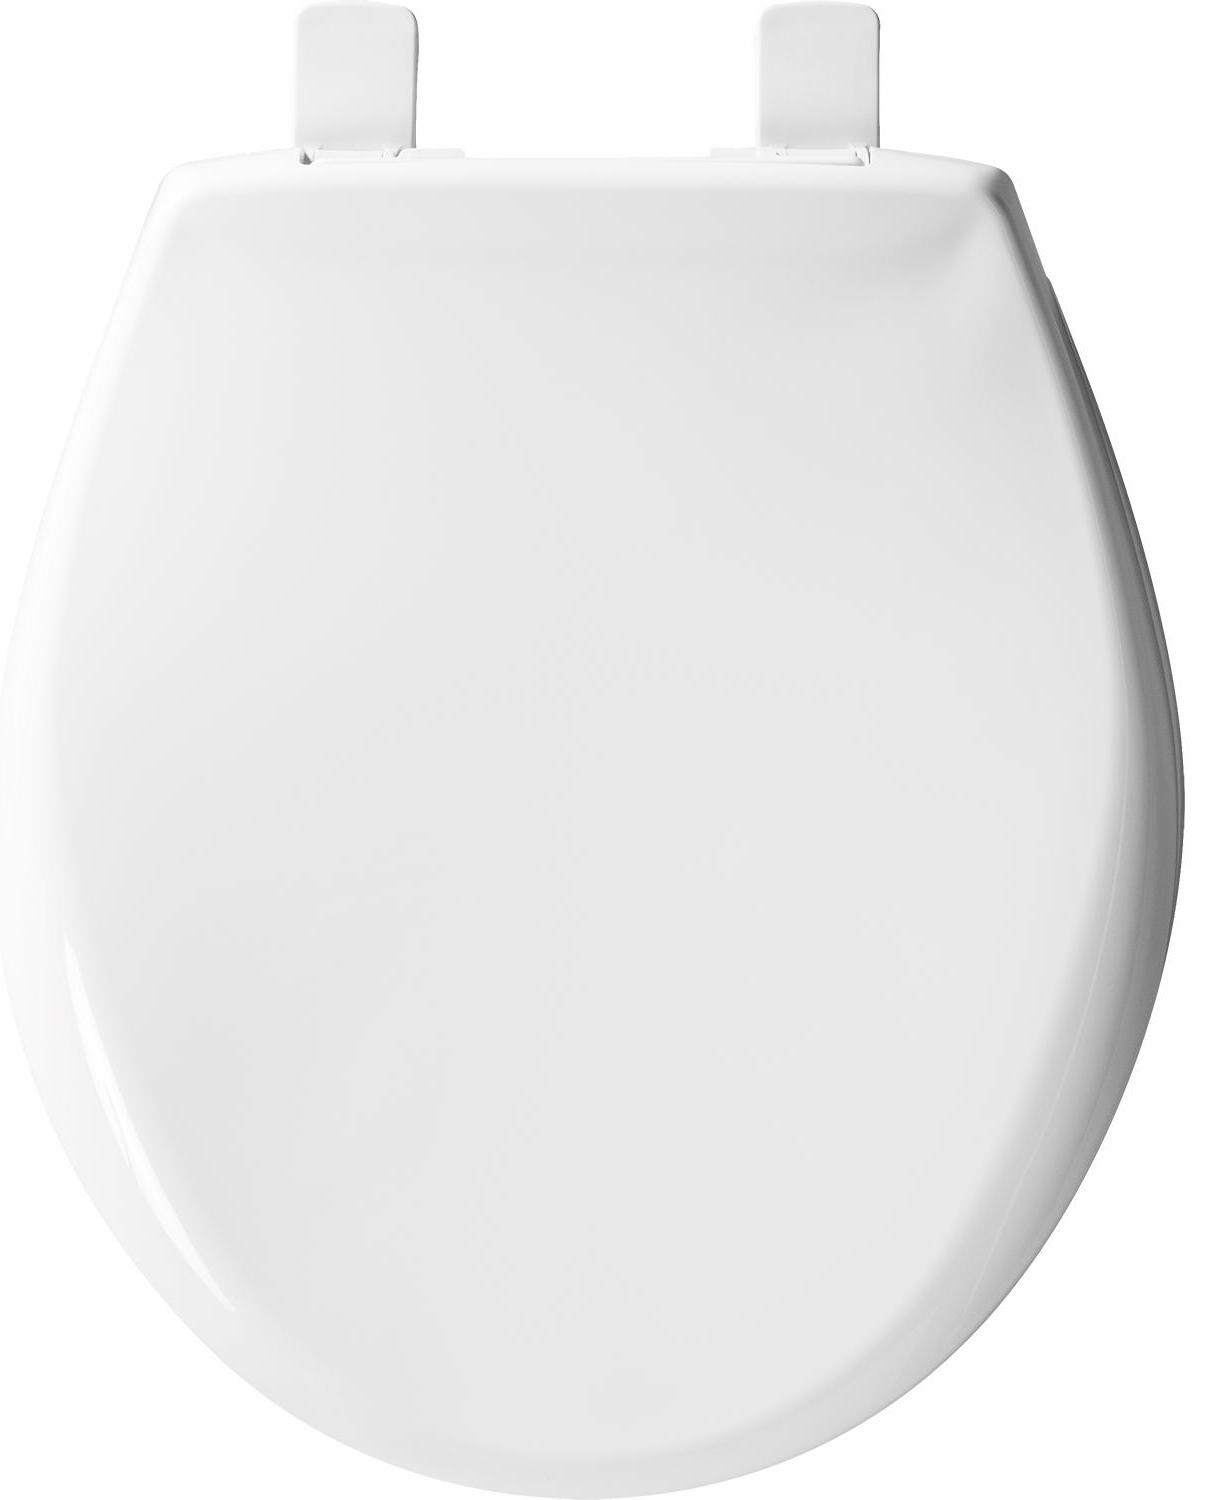 Bemis Round Plastic Whisper Close Toilet Seat 200e4 390 Andrew Sheret Ltd - Bemis Whisper Close Toilet Seat Removal